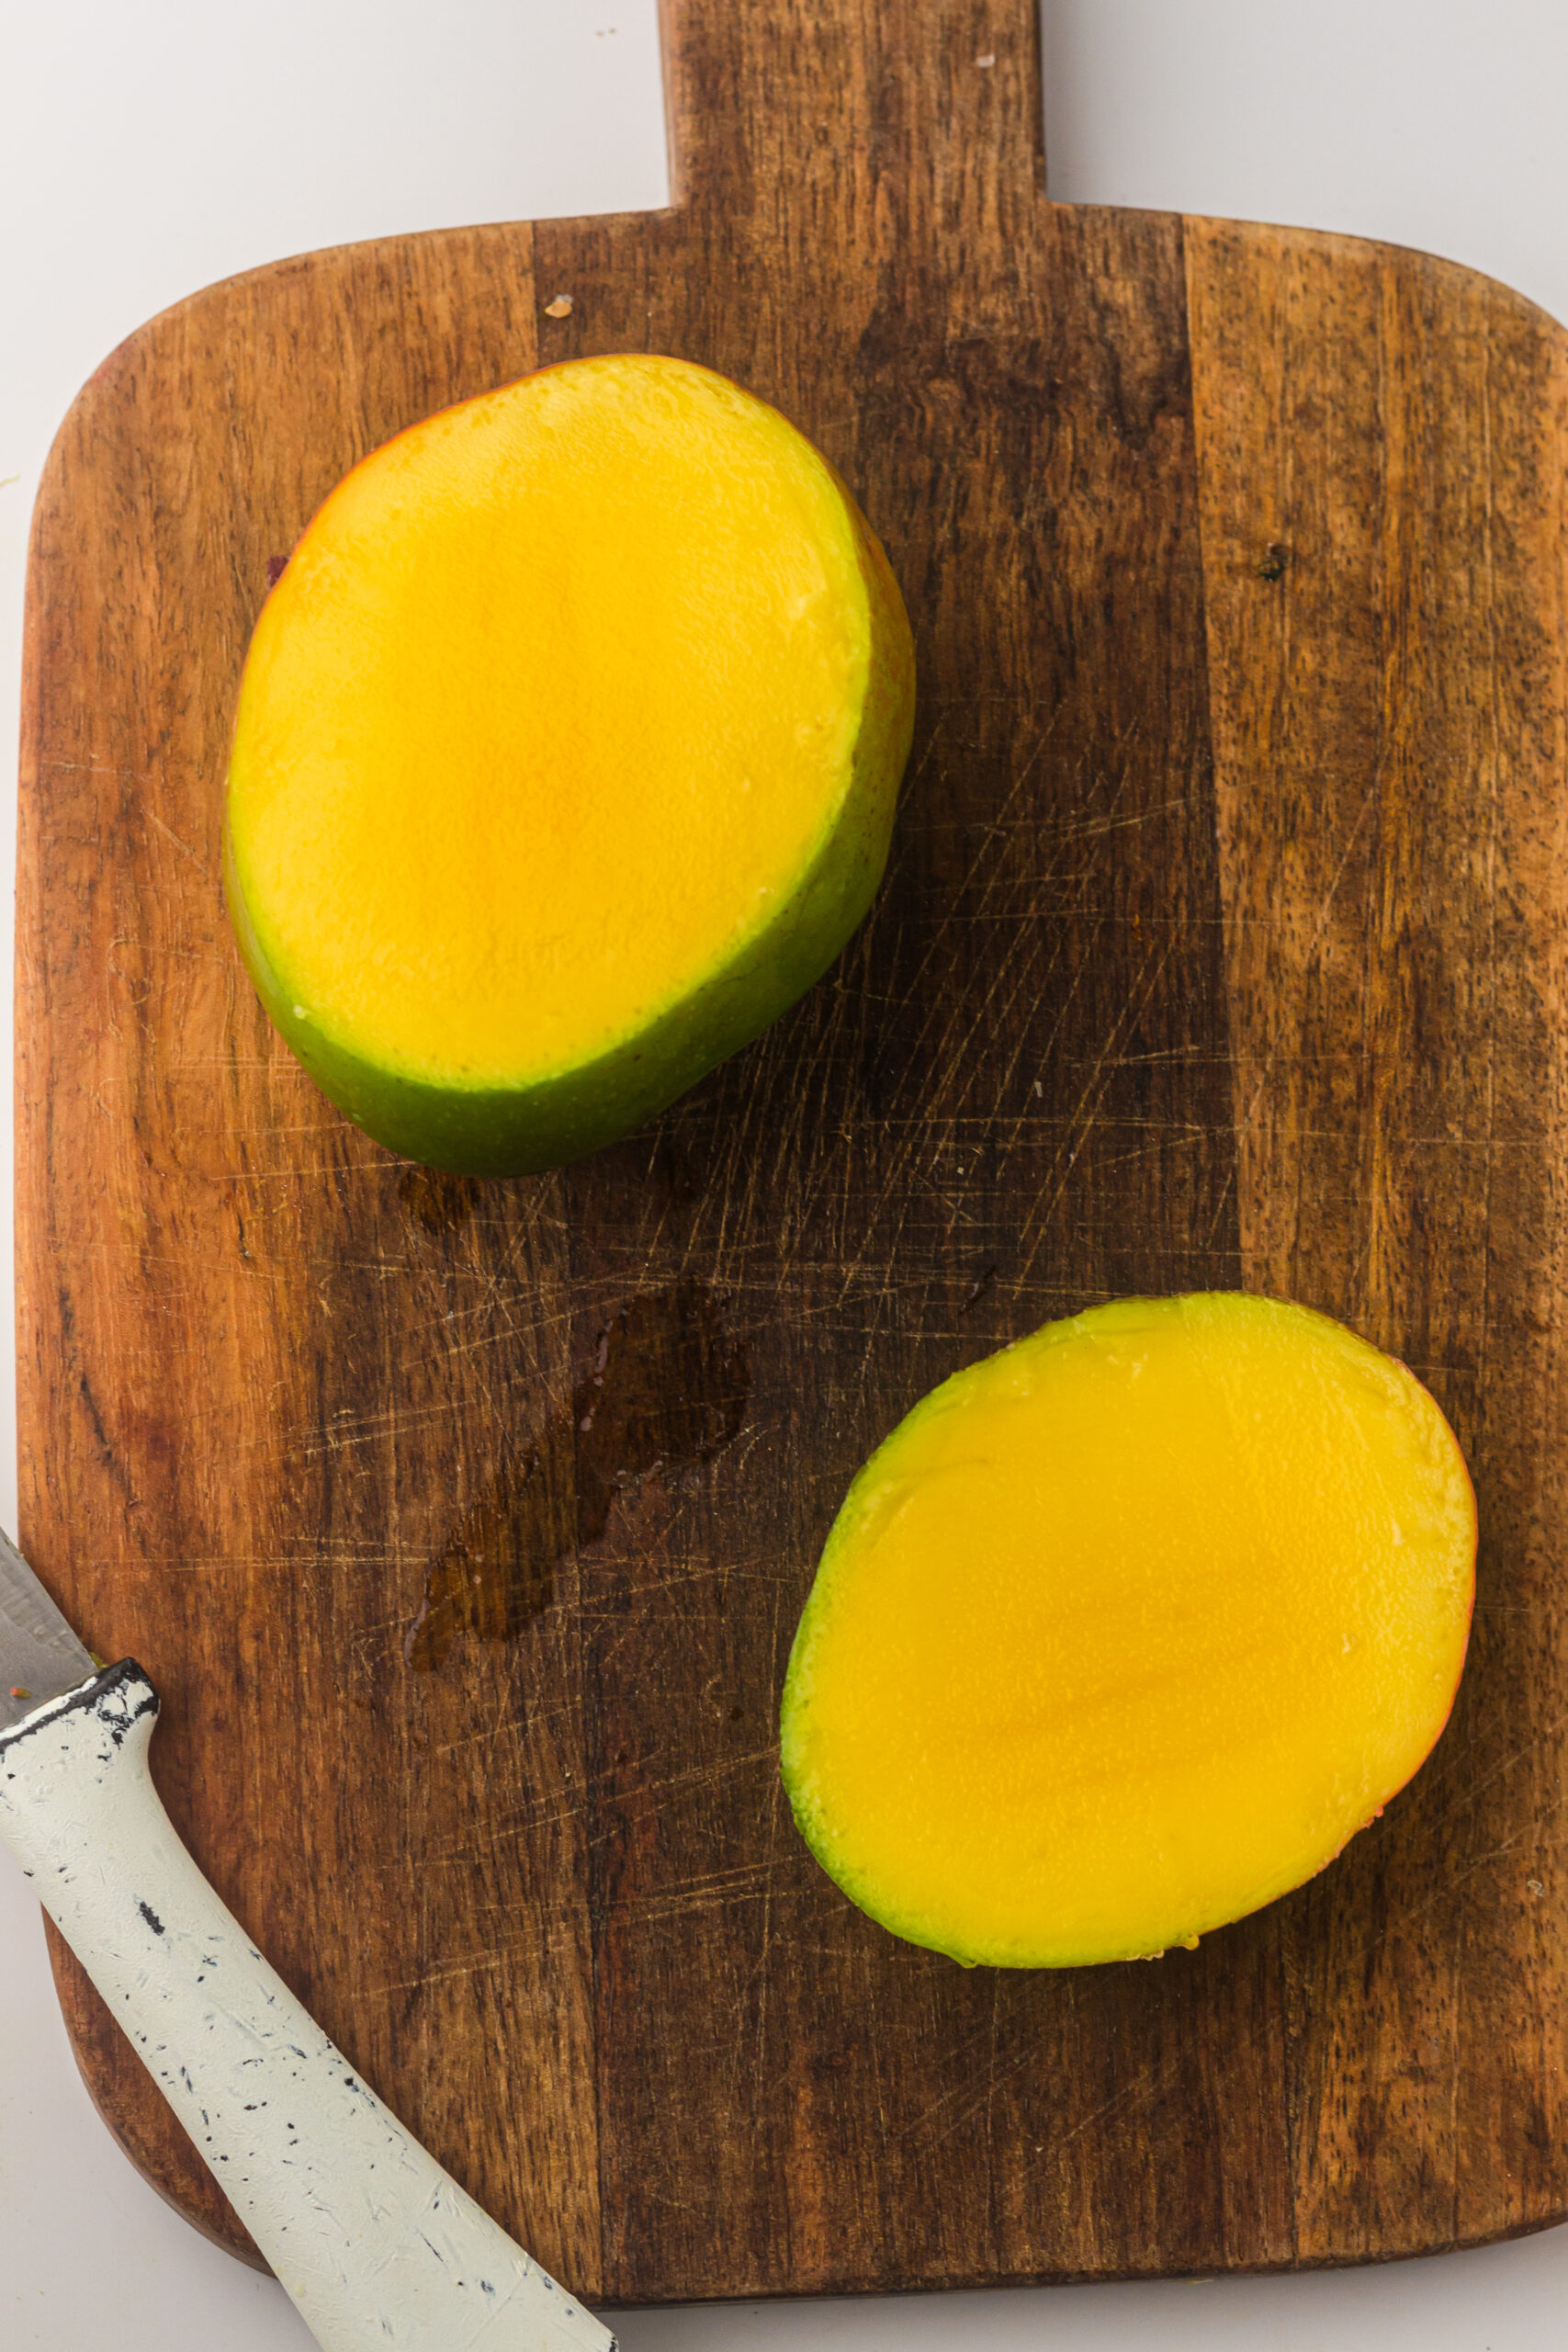 Peeling the mangoes